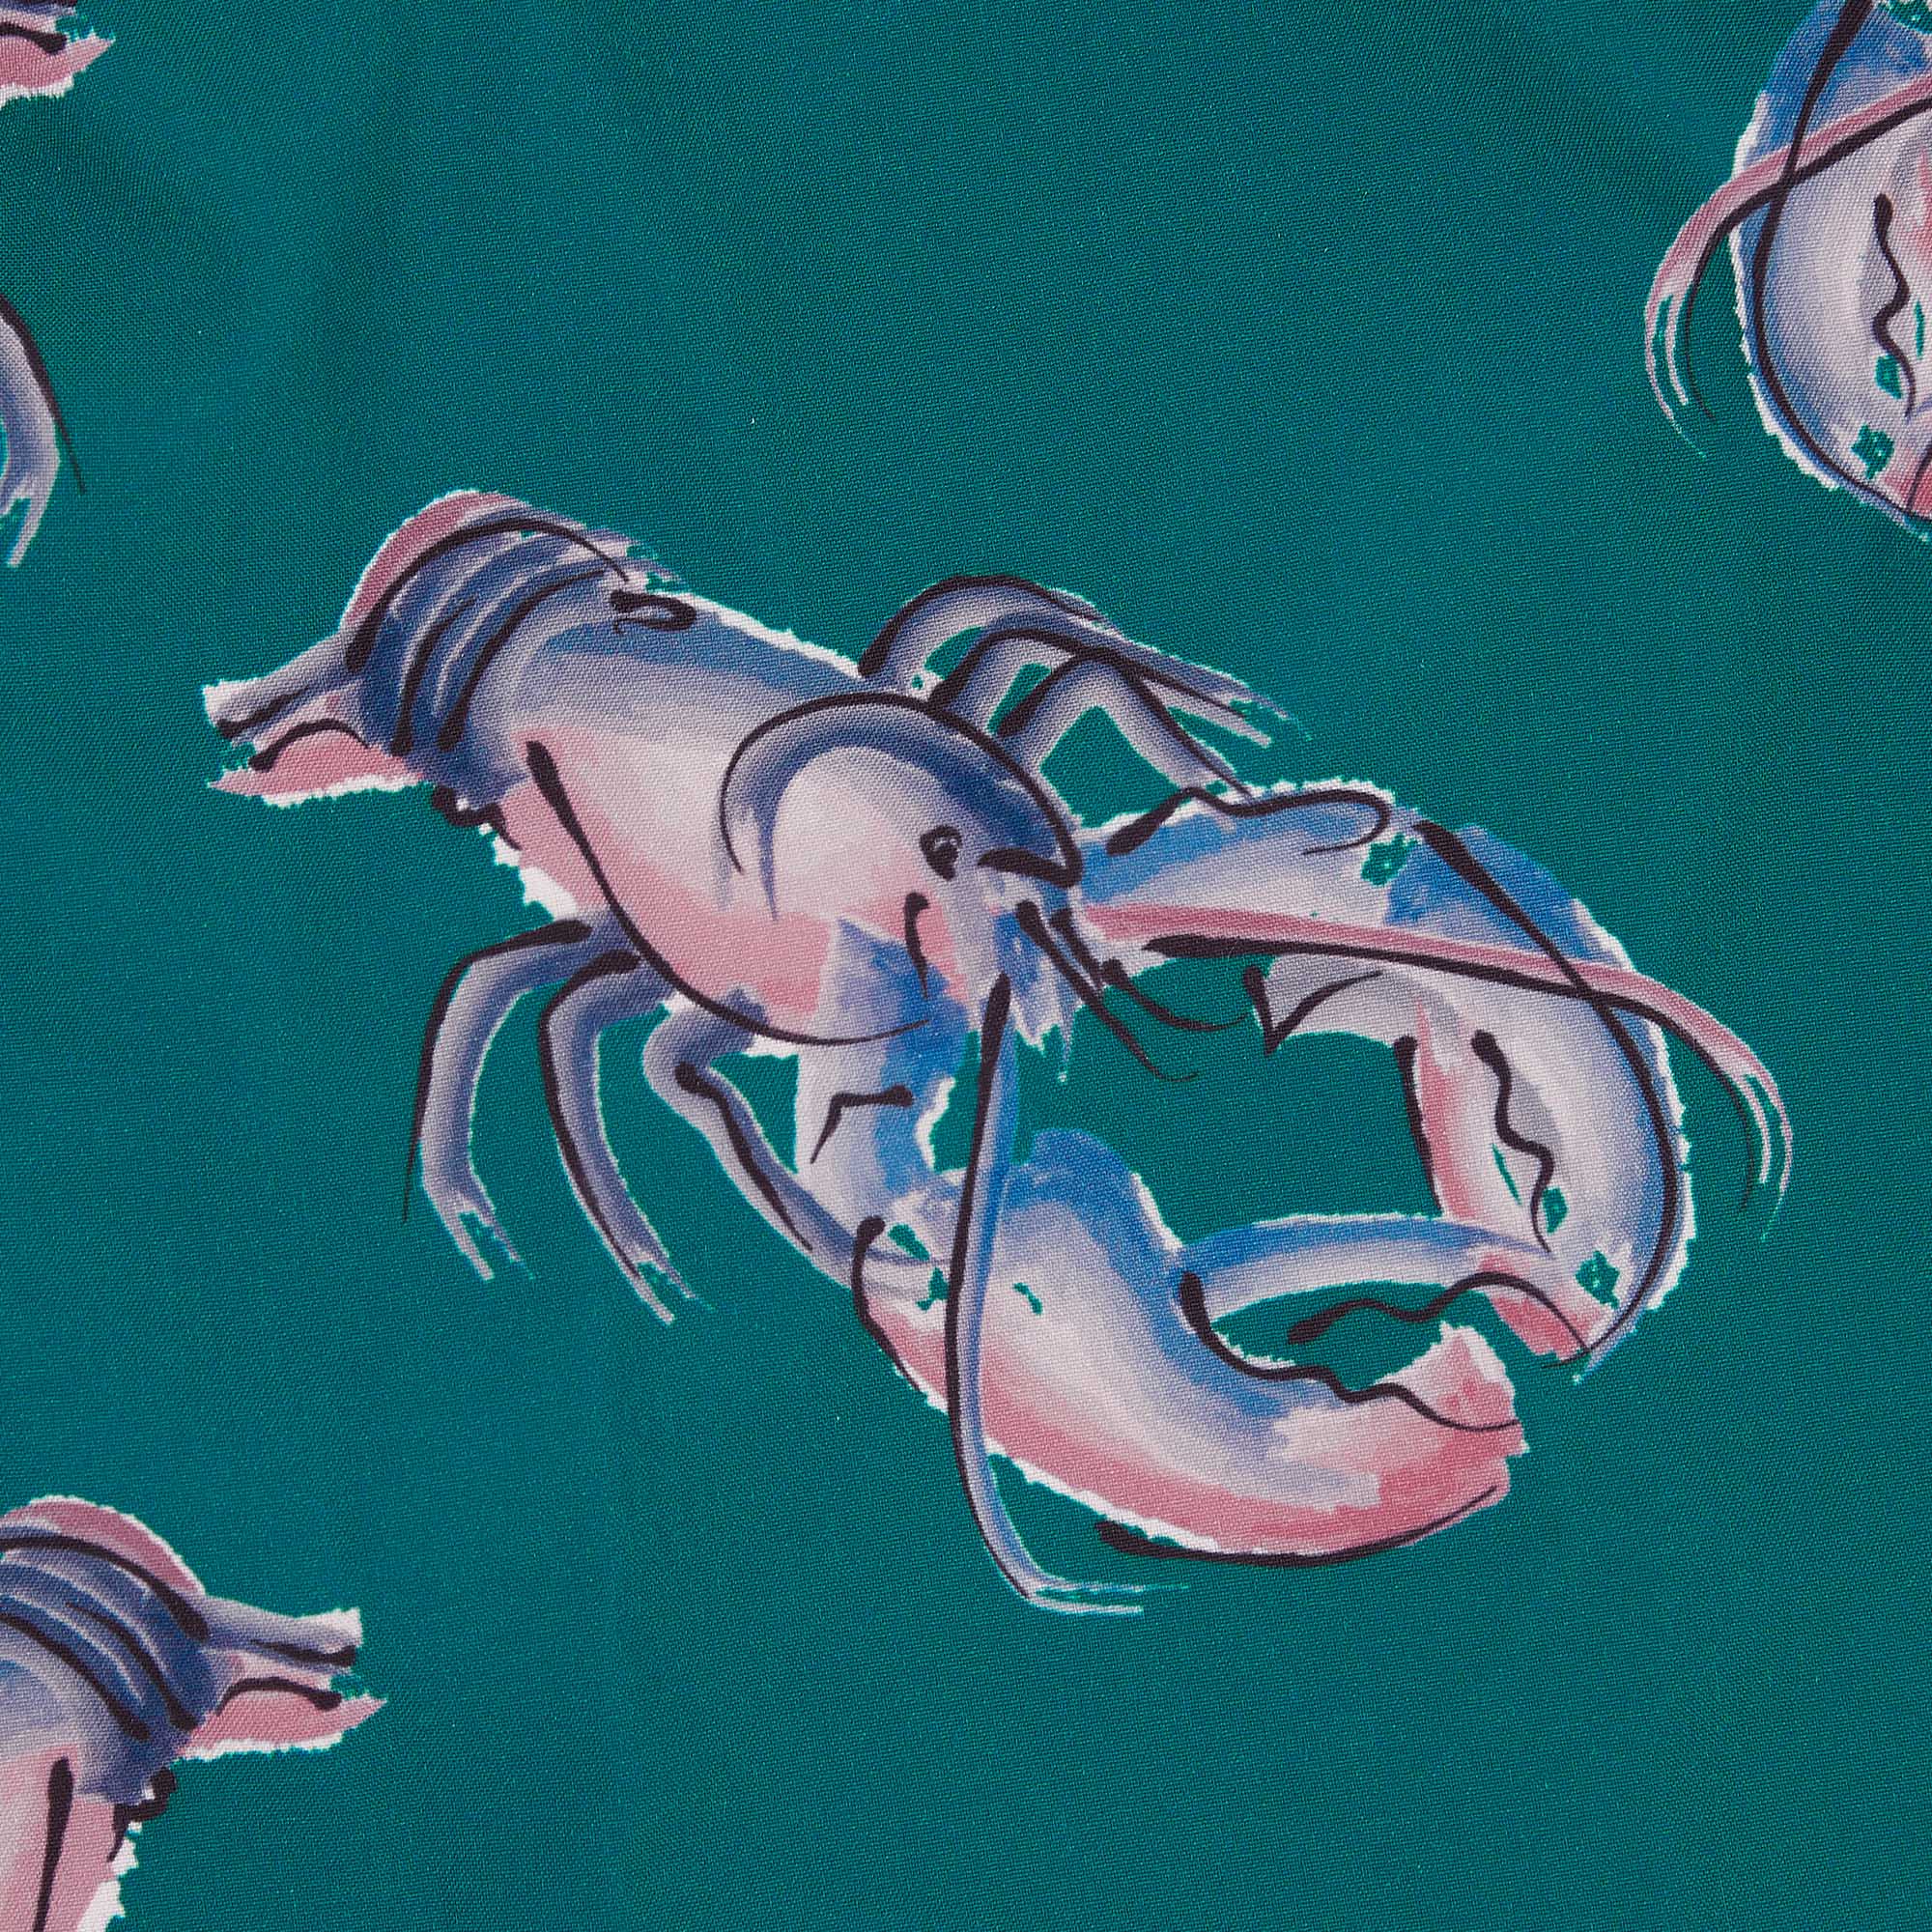 Lobsters - Swim Shorts with MK1 Waterproof Pocket